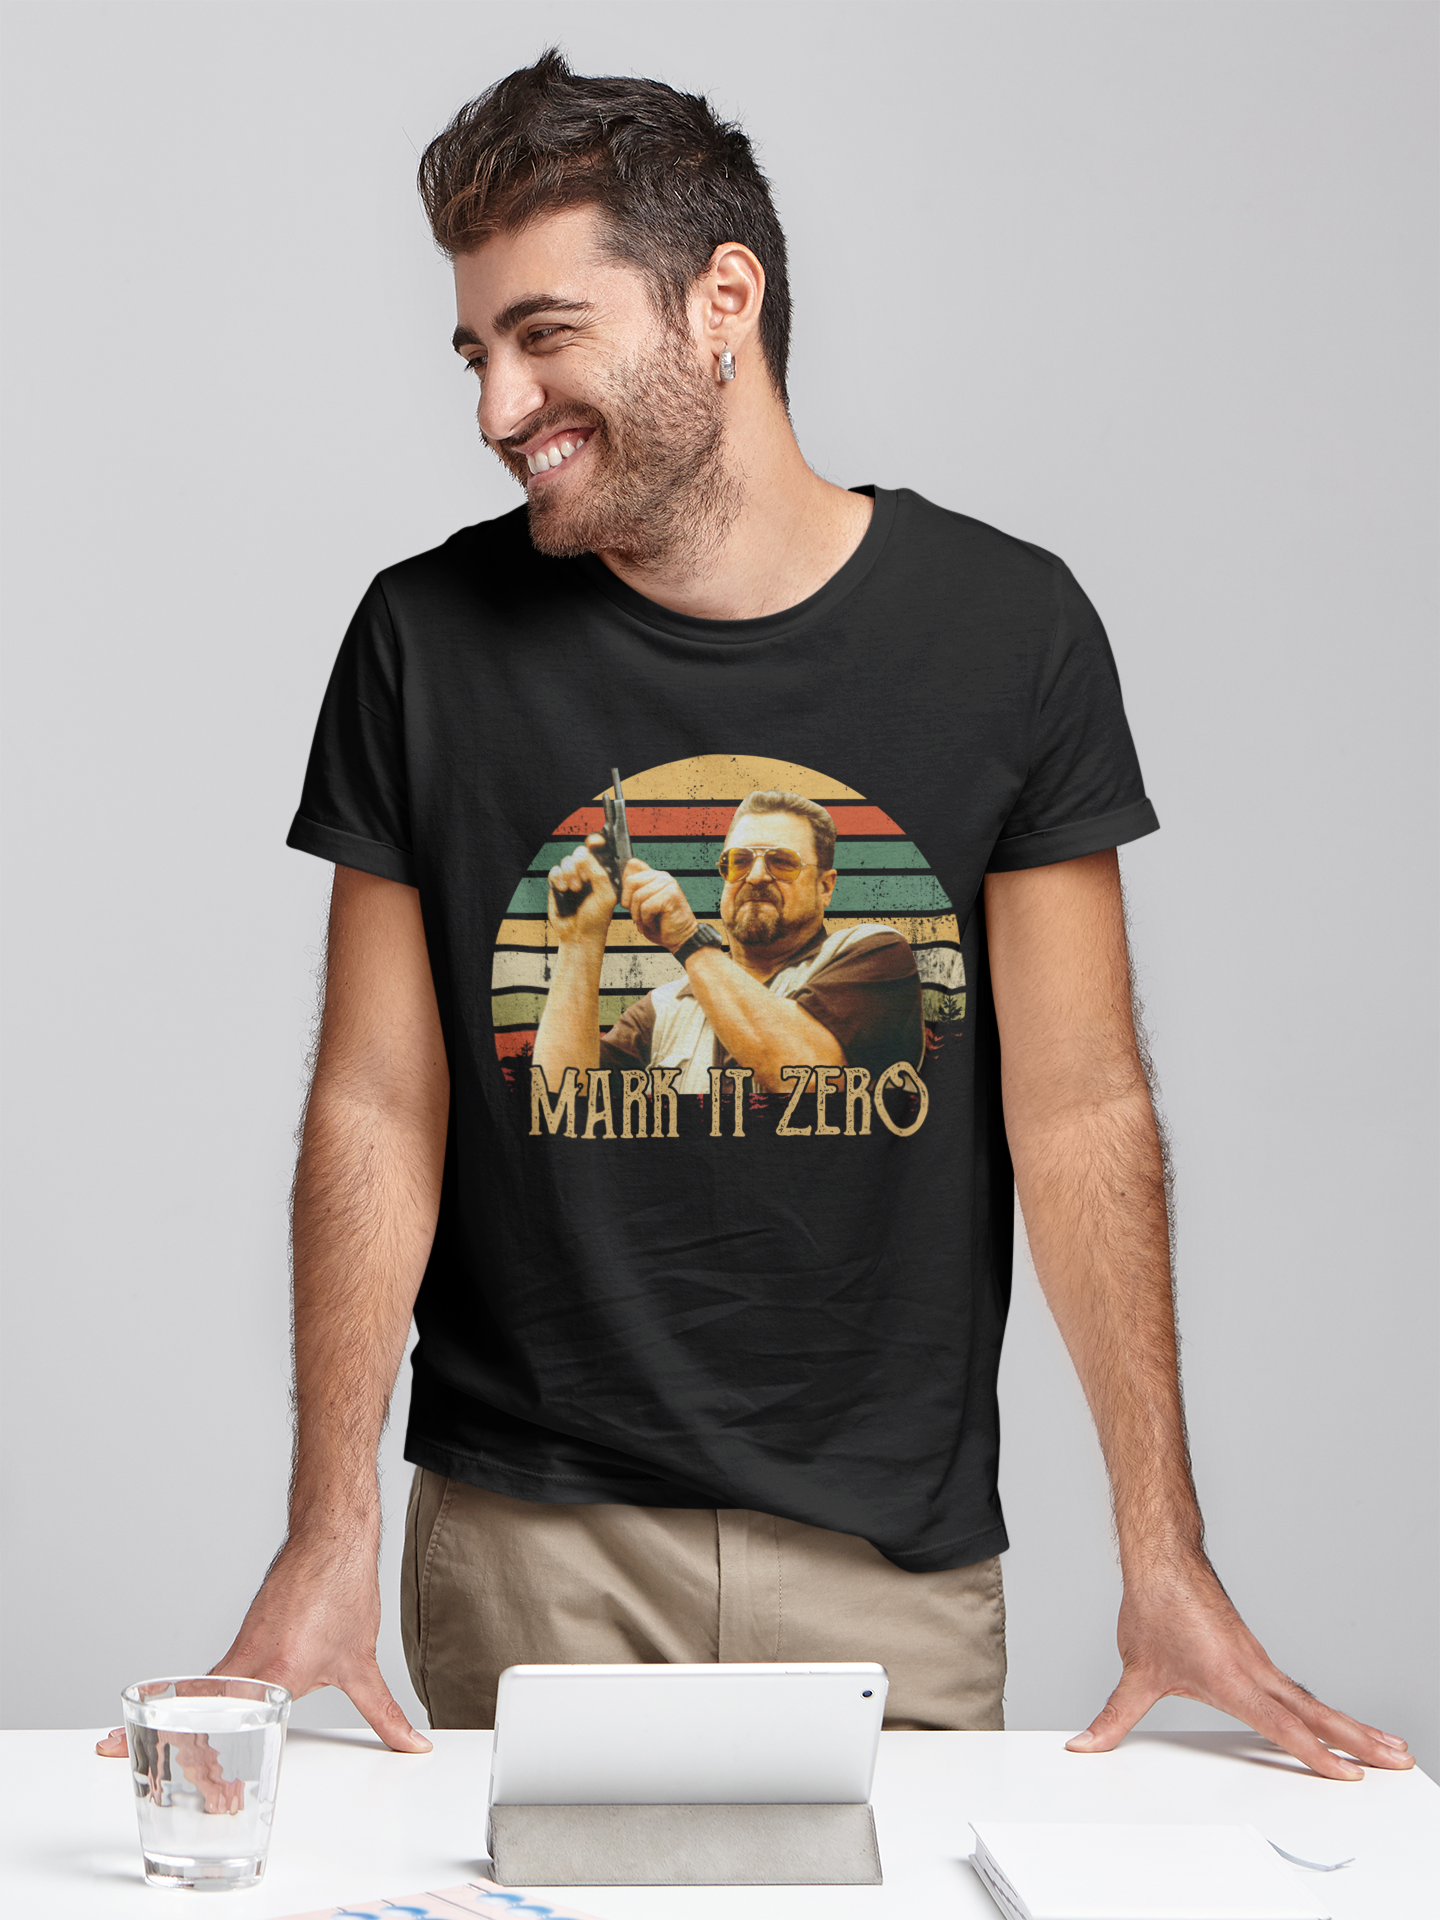 The Big Lebowski T Shirt, Walter Sobchak T Shirt, Mark It Zero Tshirt